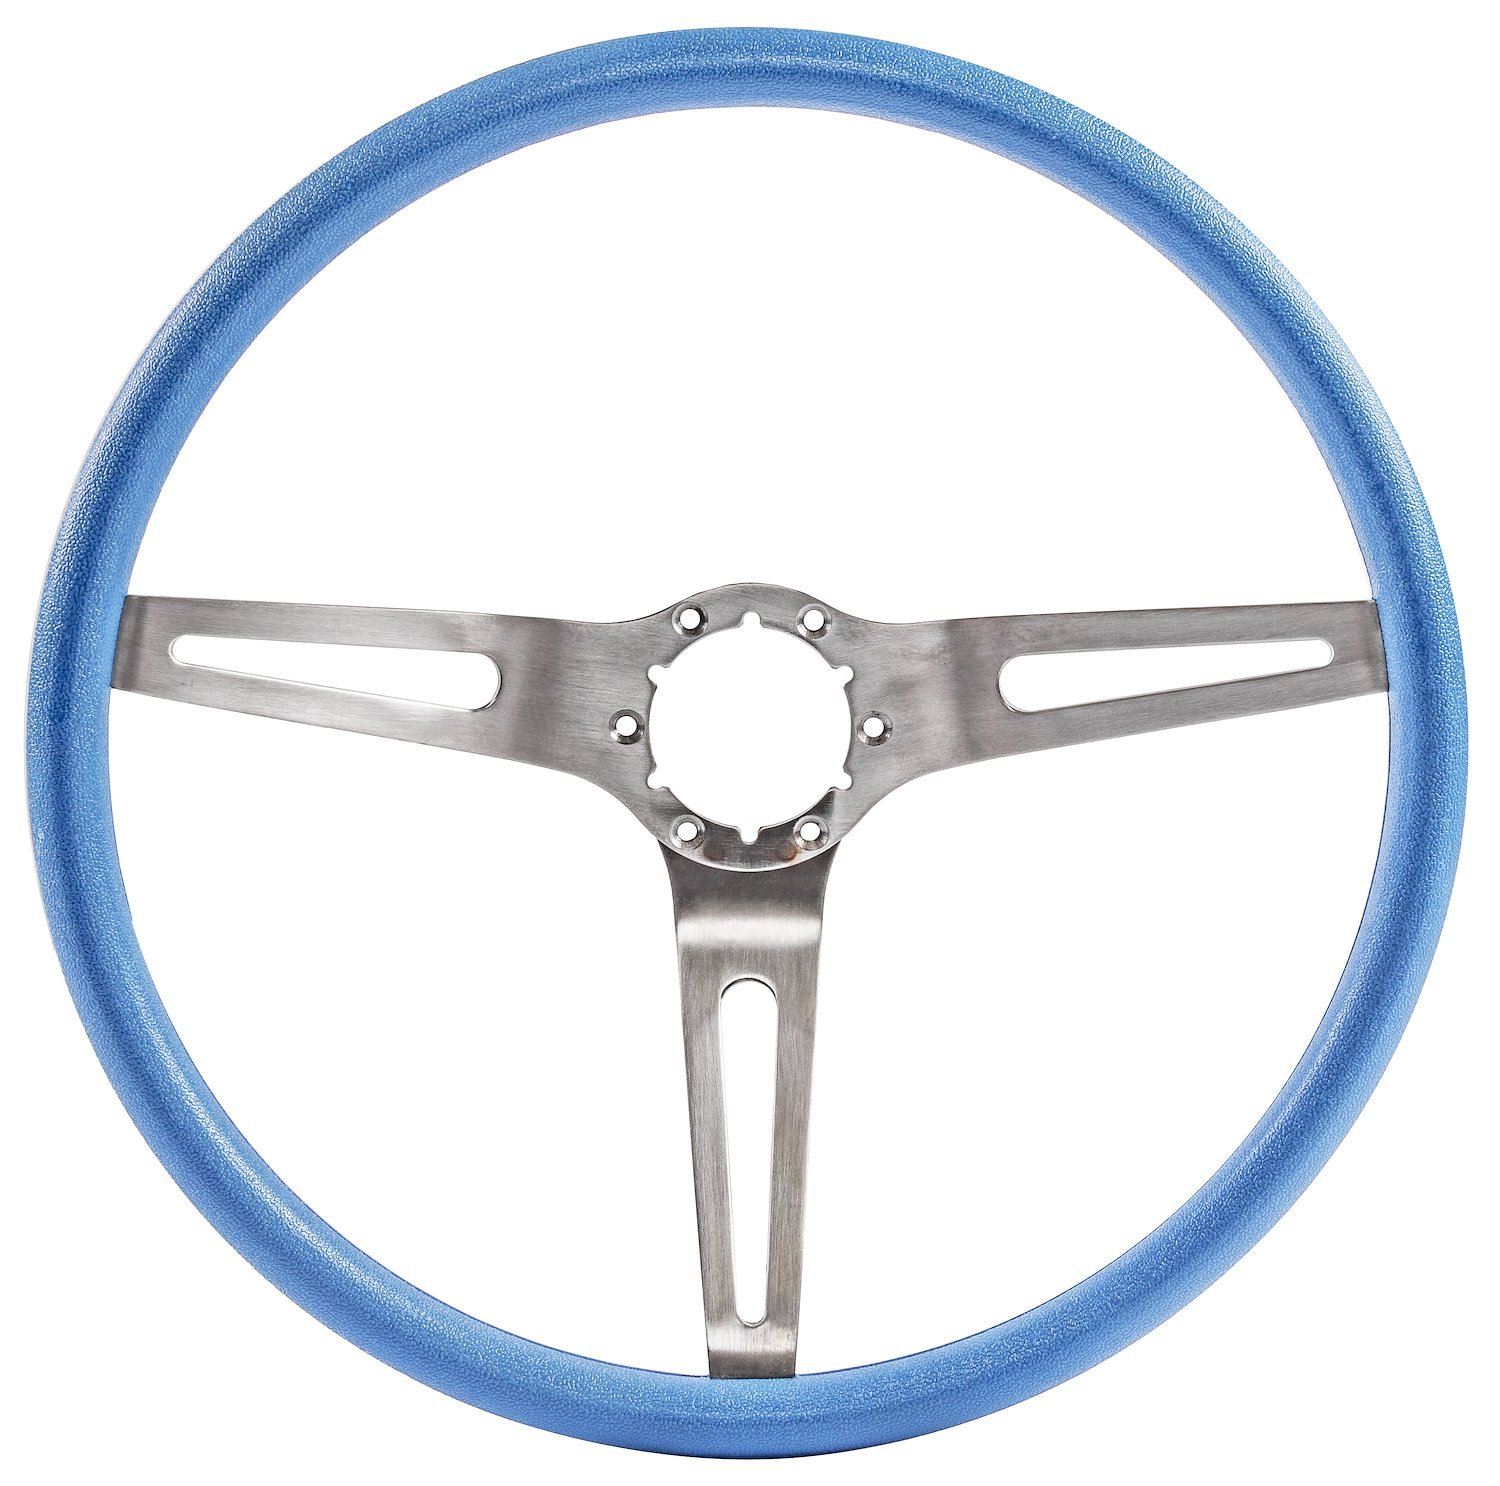 3-Spoke Comfort Grip Steering Wheel Fits Select 1967-1972 Chevrolet Cars & 1960-1975 Chevrolet & GMC Trucks [Blue Grip]